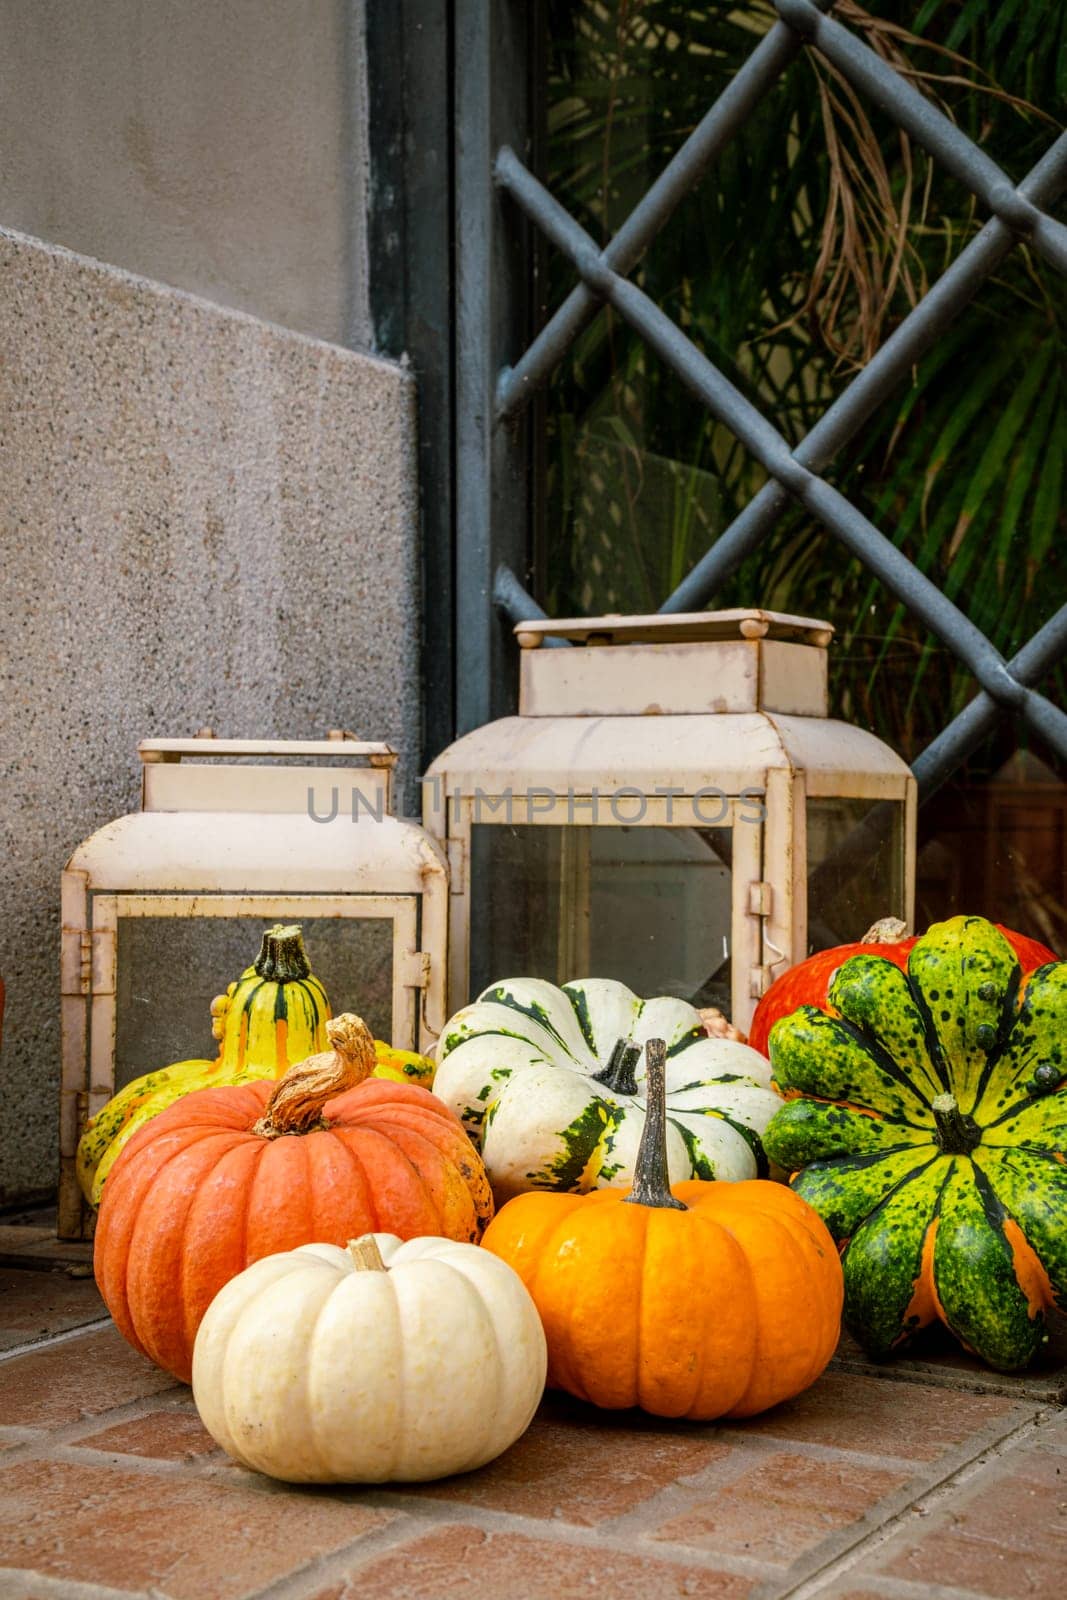 Series of colorful market pumpkins in front of the front door in autumn